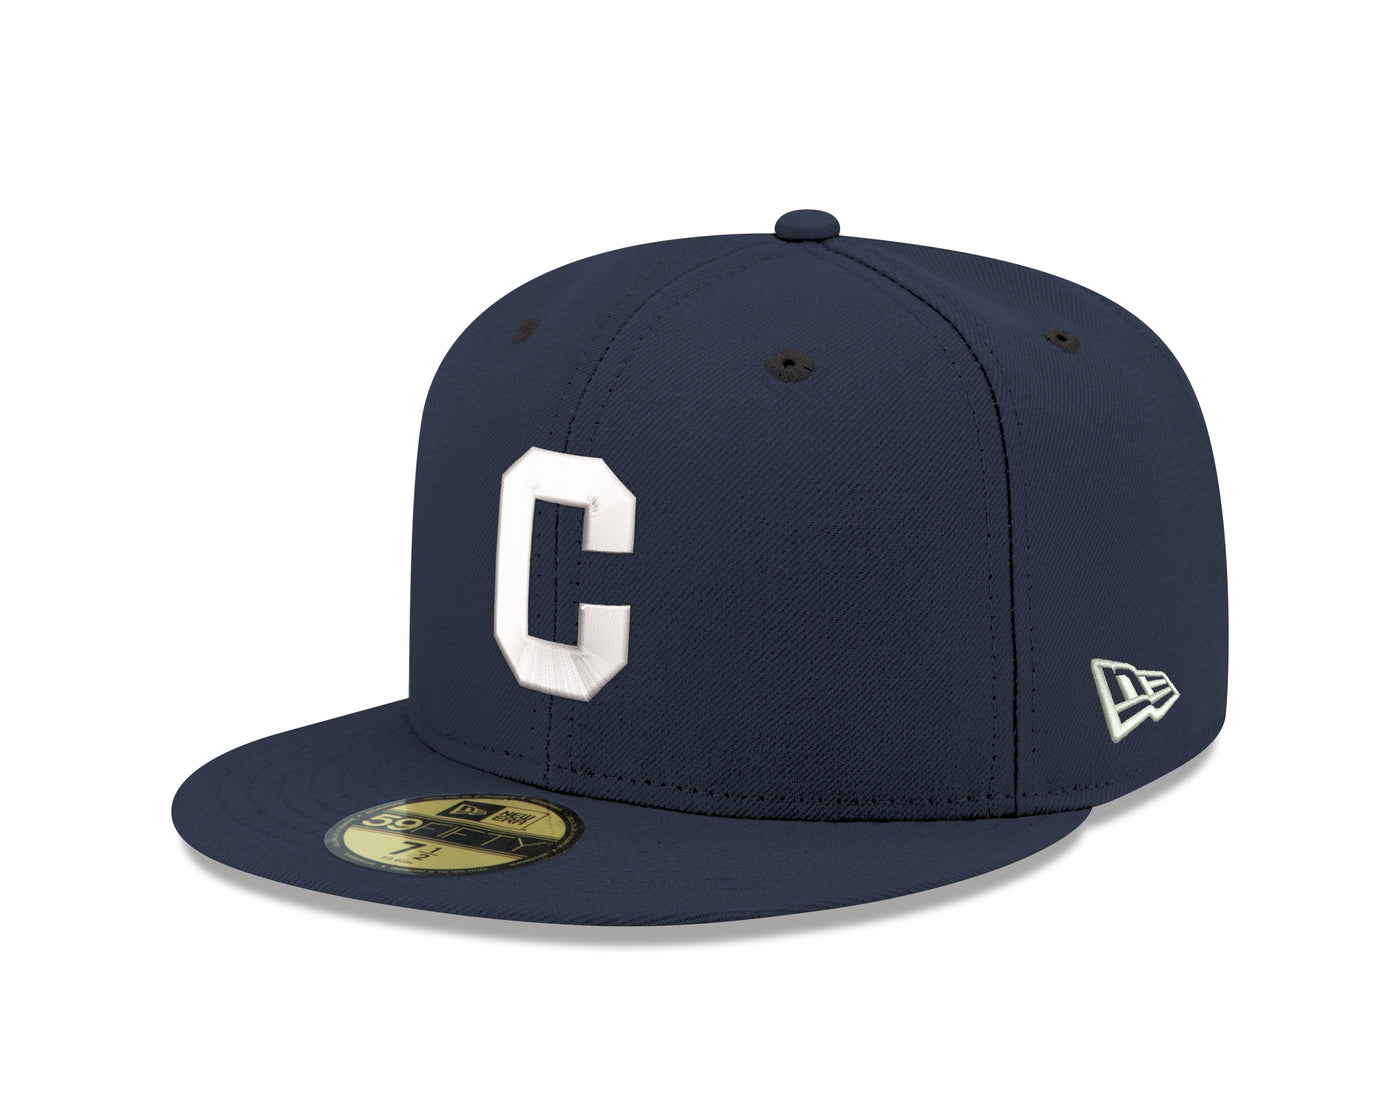 CHICAGO CUBS NEW ERA 1926 LOGO 59FIFTY CAP